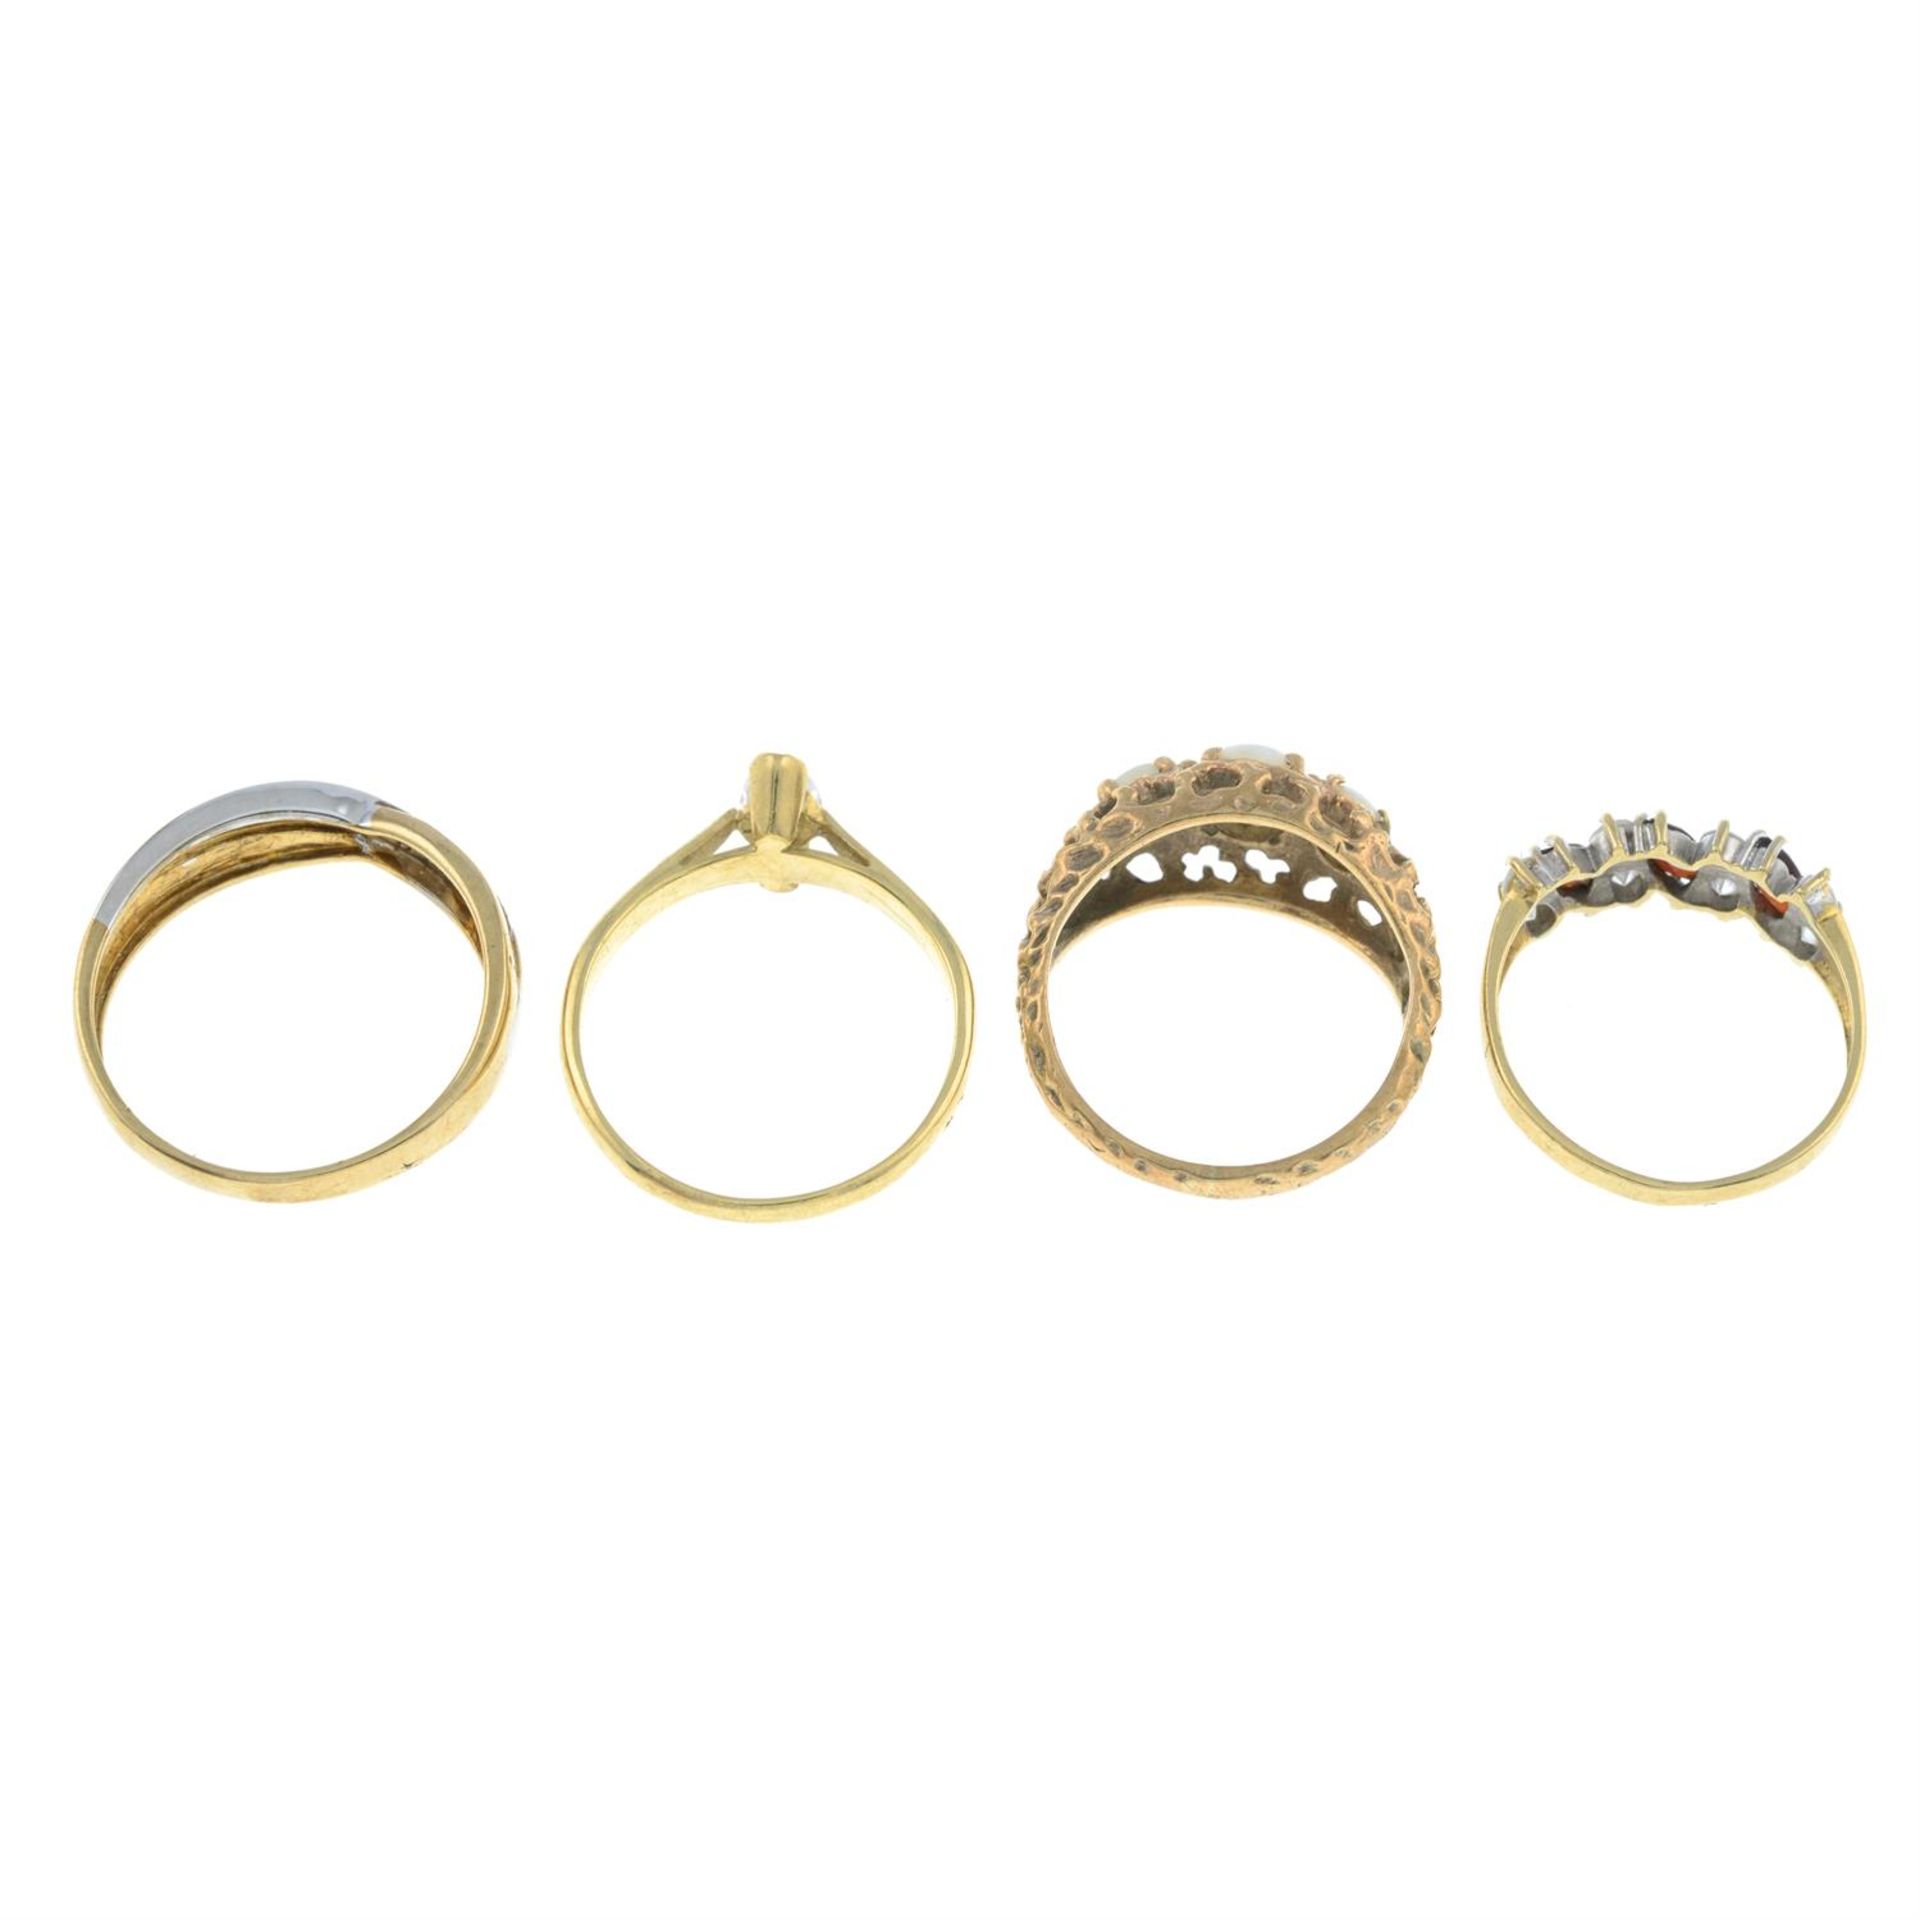 Four gem-set rings. - Image 2 of 2